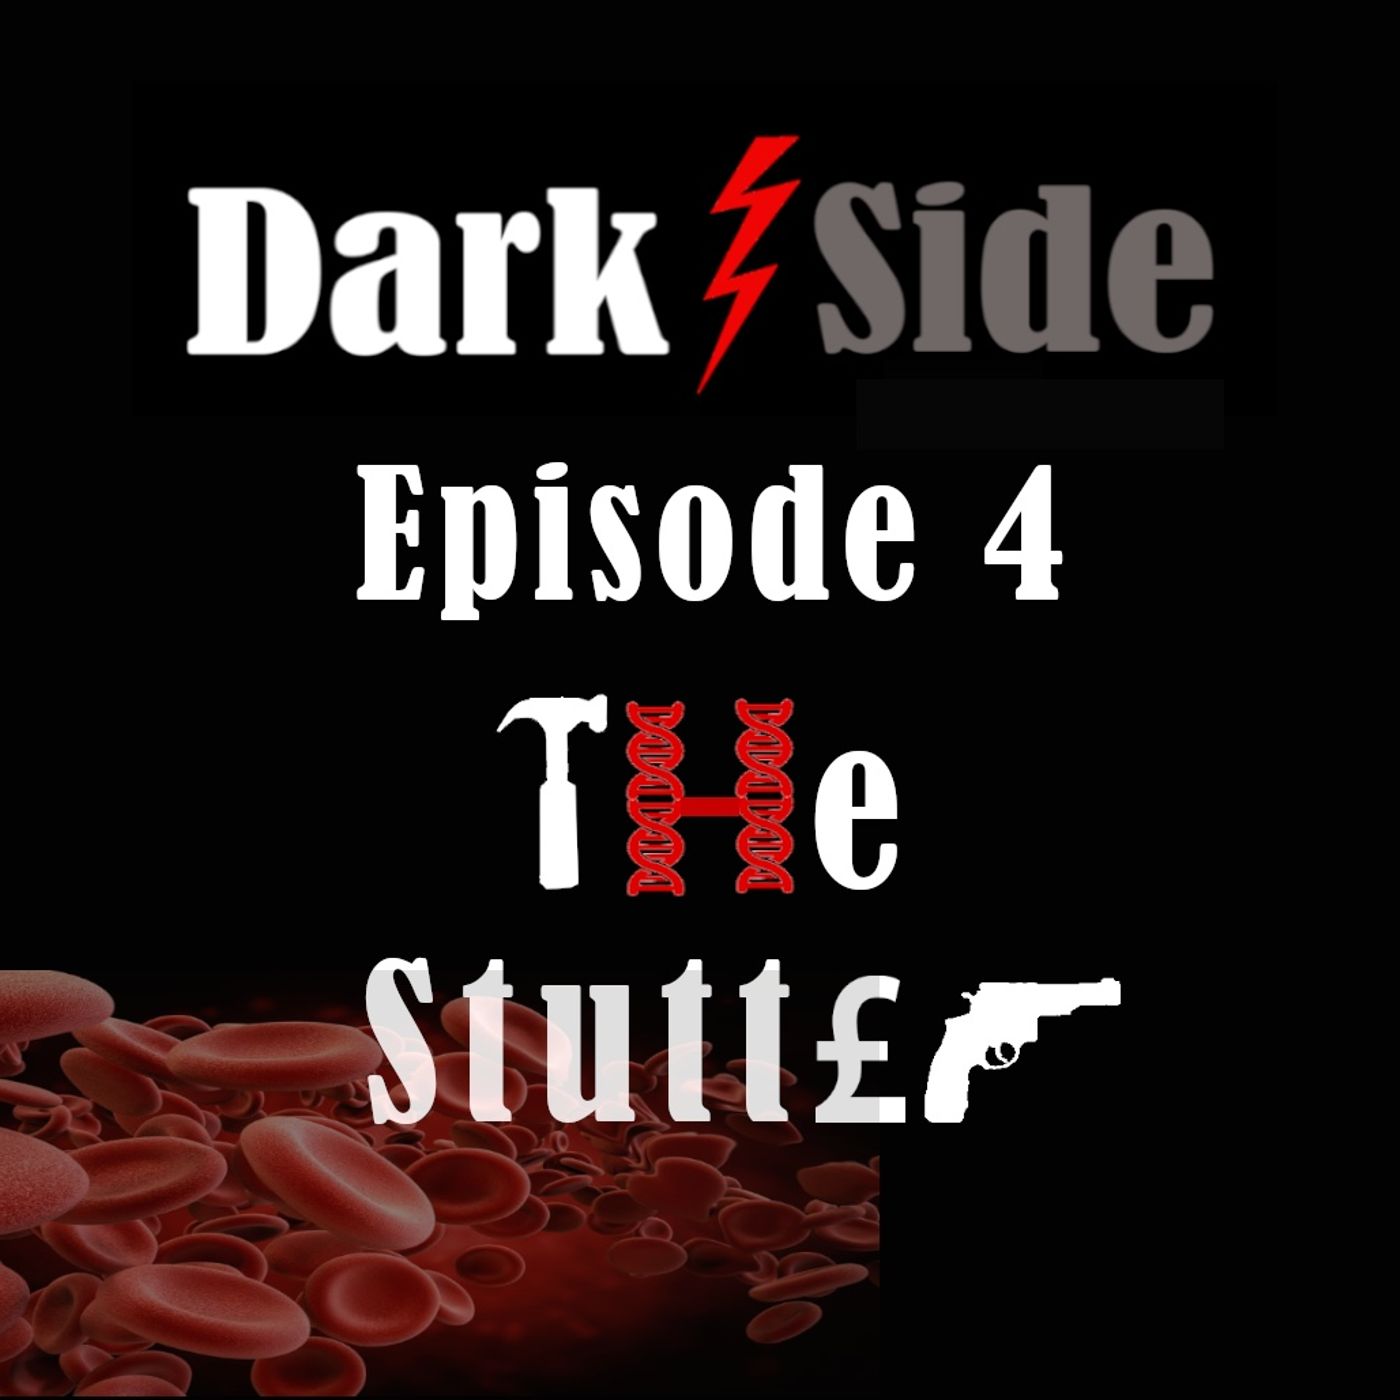 The Stutter by Dark Side